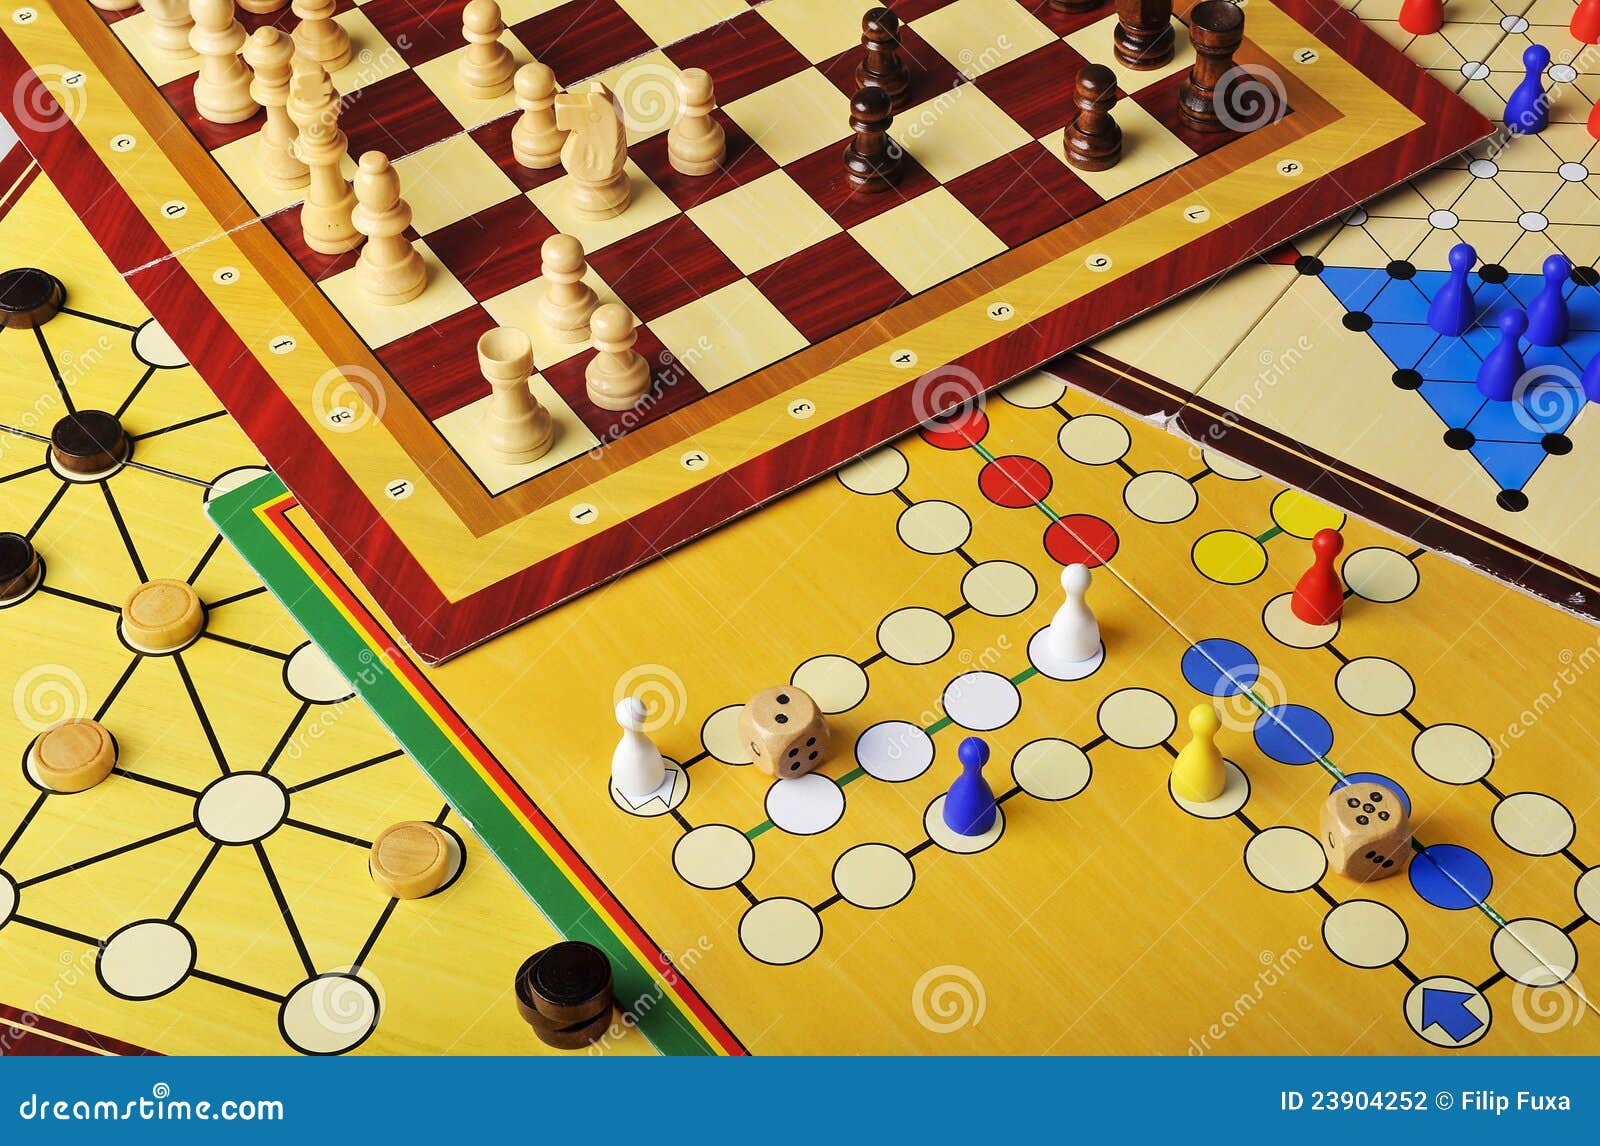 board-games-23904252.jpg